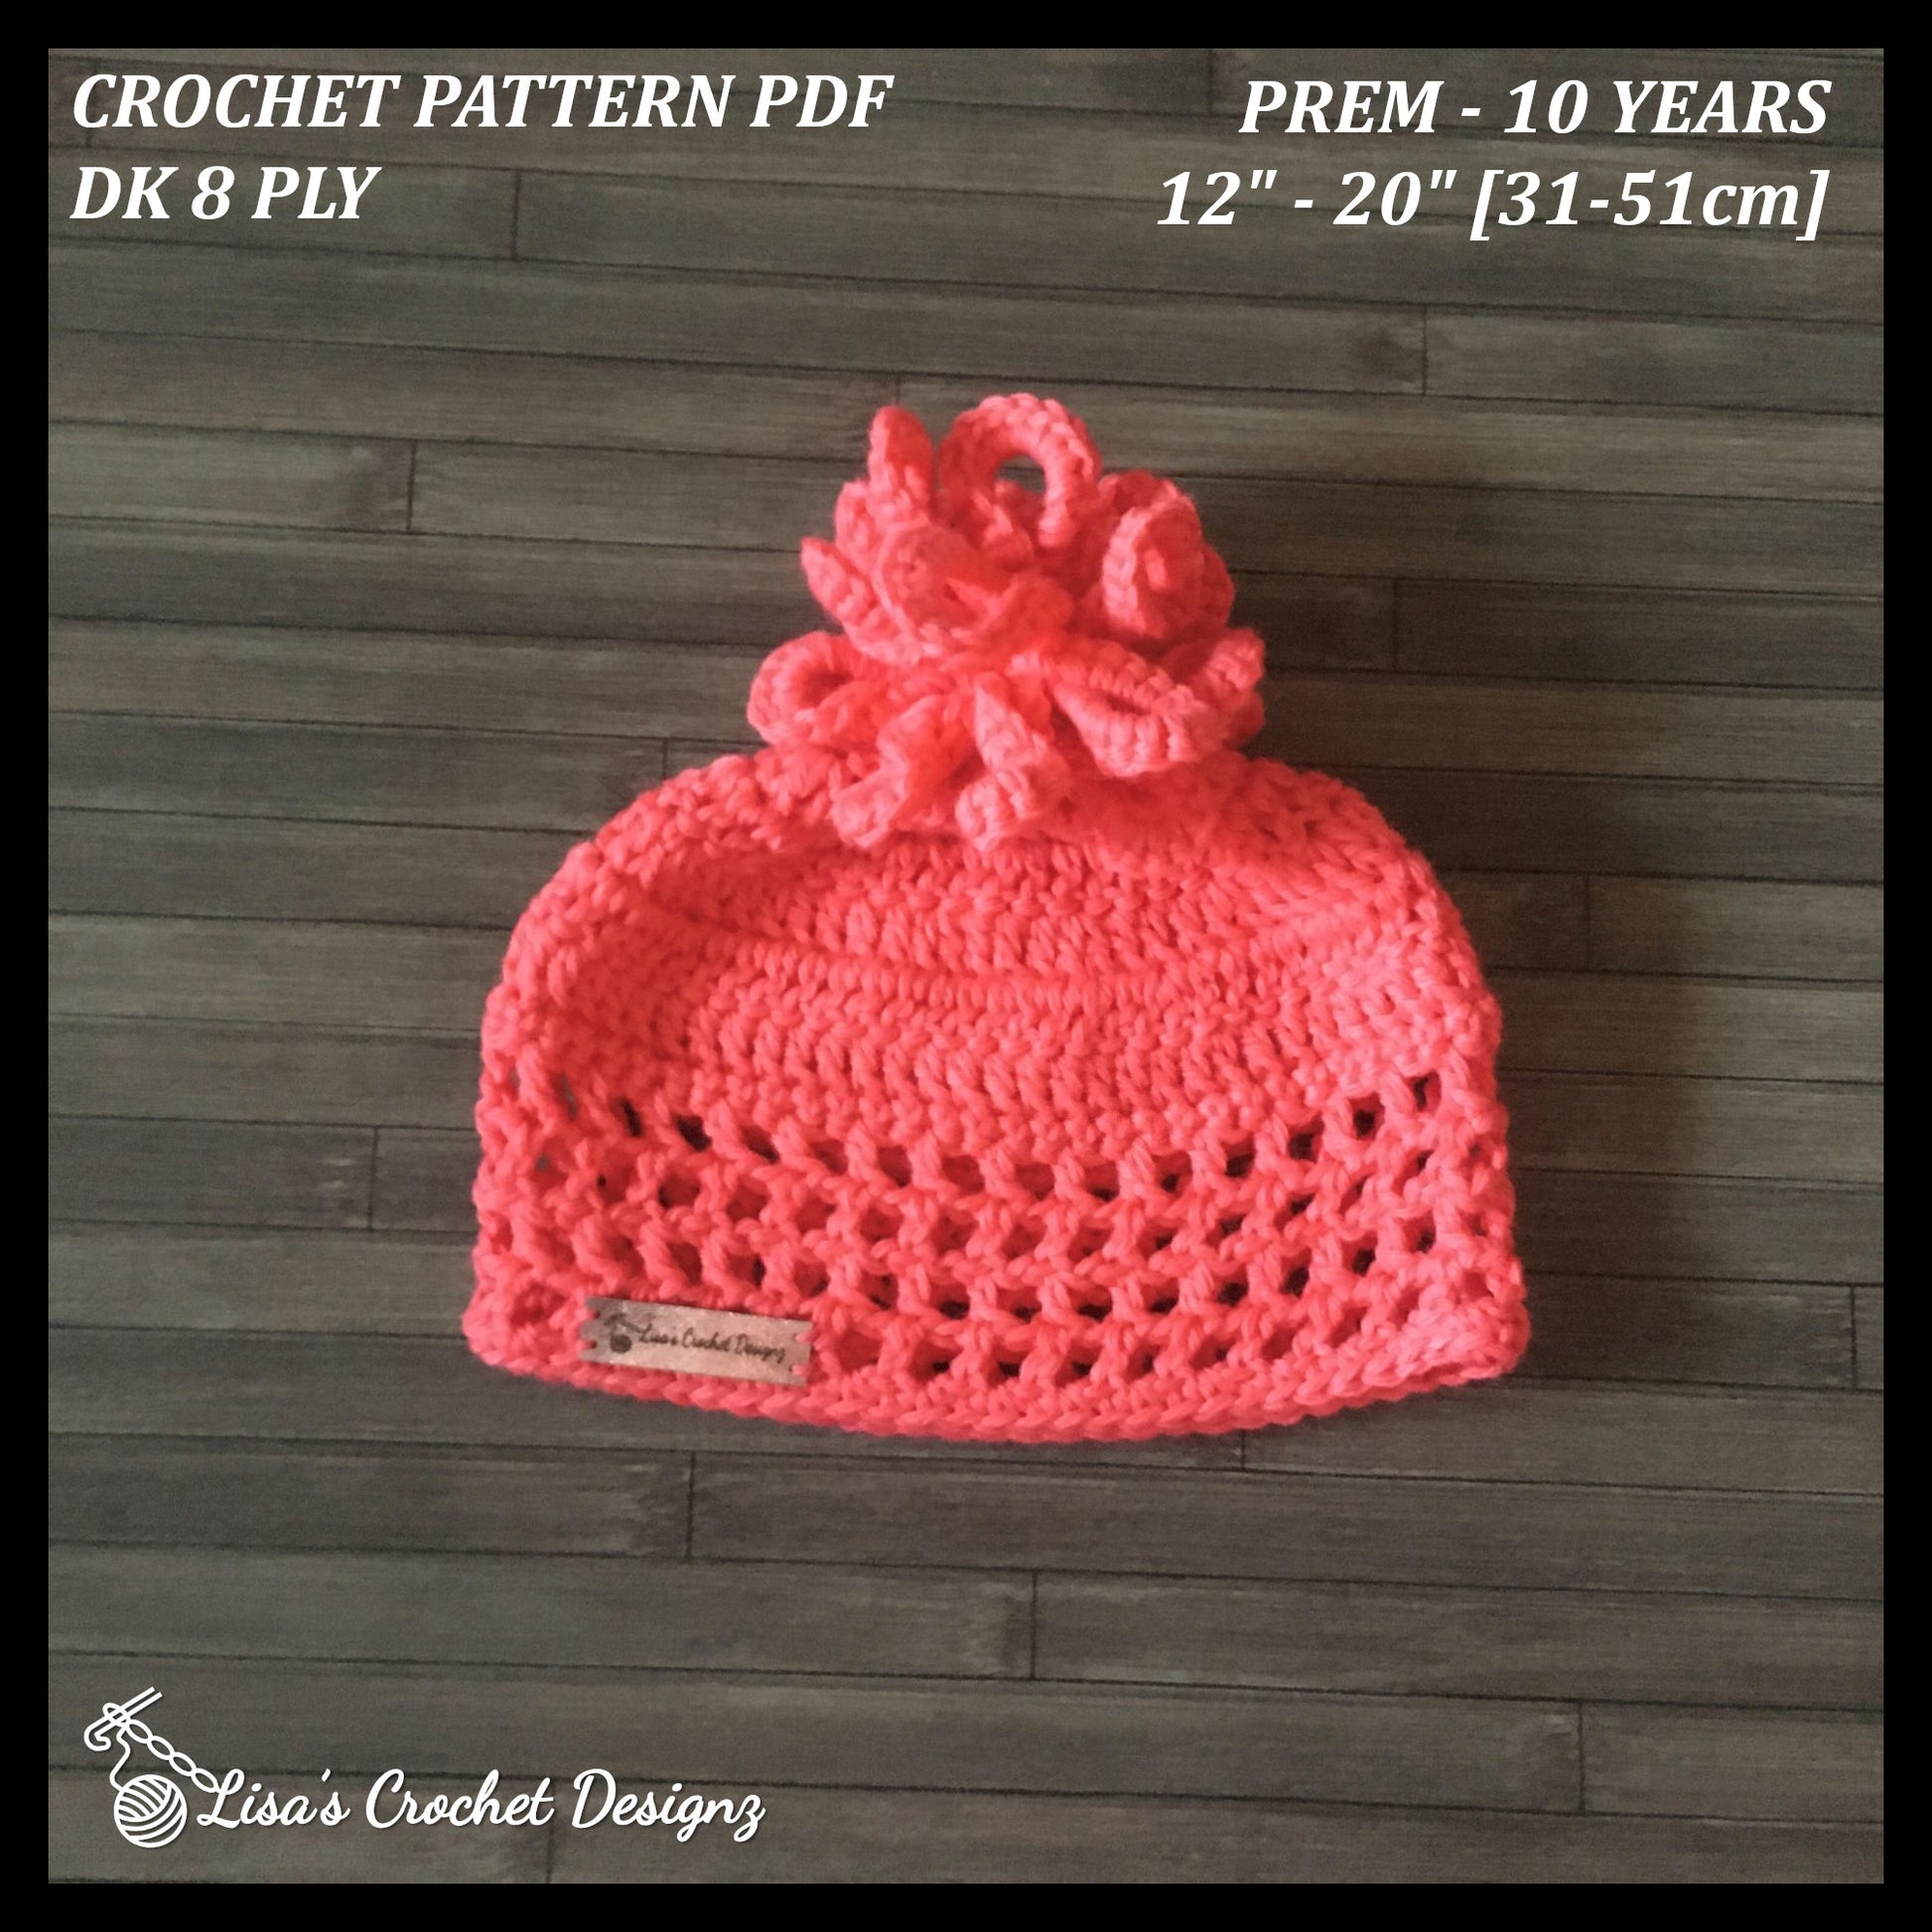 Makr Baby Soft Crochet & Knitting Yarn 8ply, Coral- 100g Soft